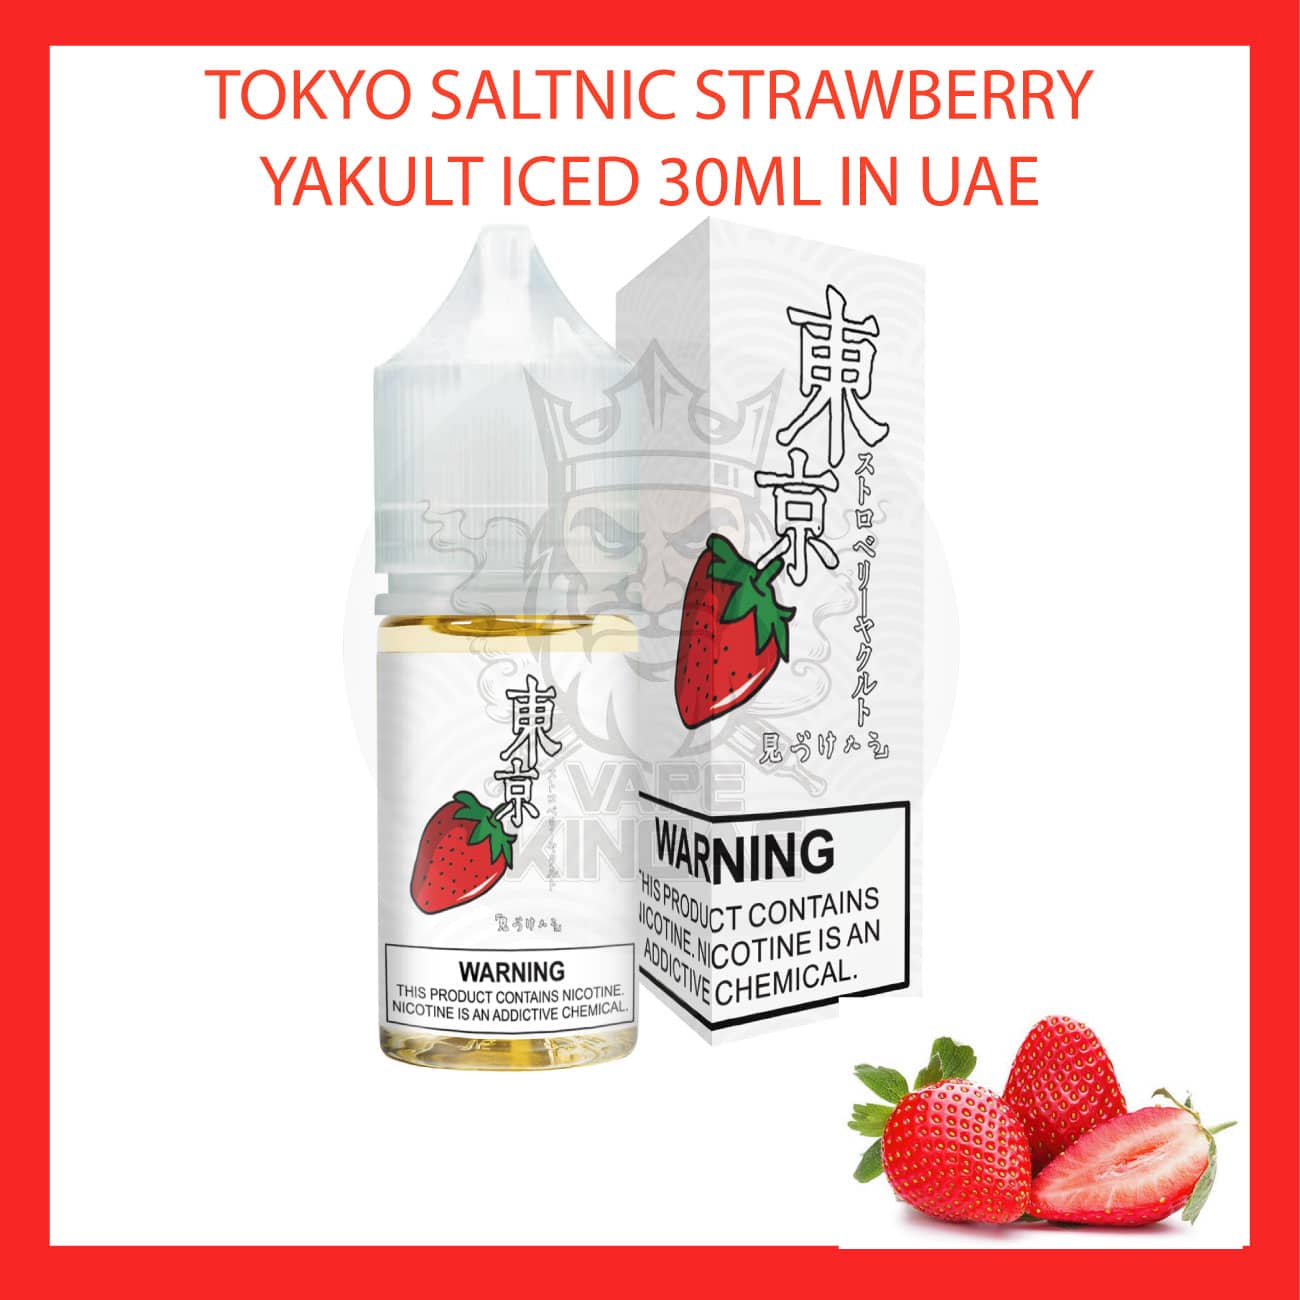 TOKYO SALTNIC STRAWBERRY
YAKULT ICED 30ML IN UAE